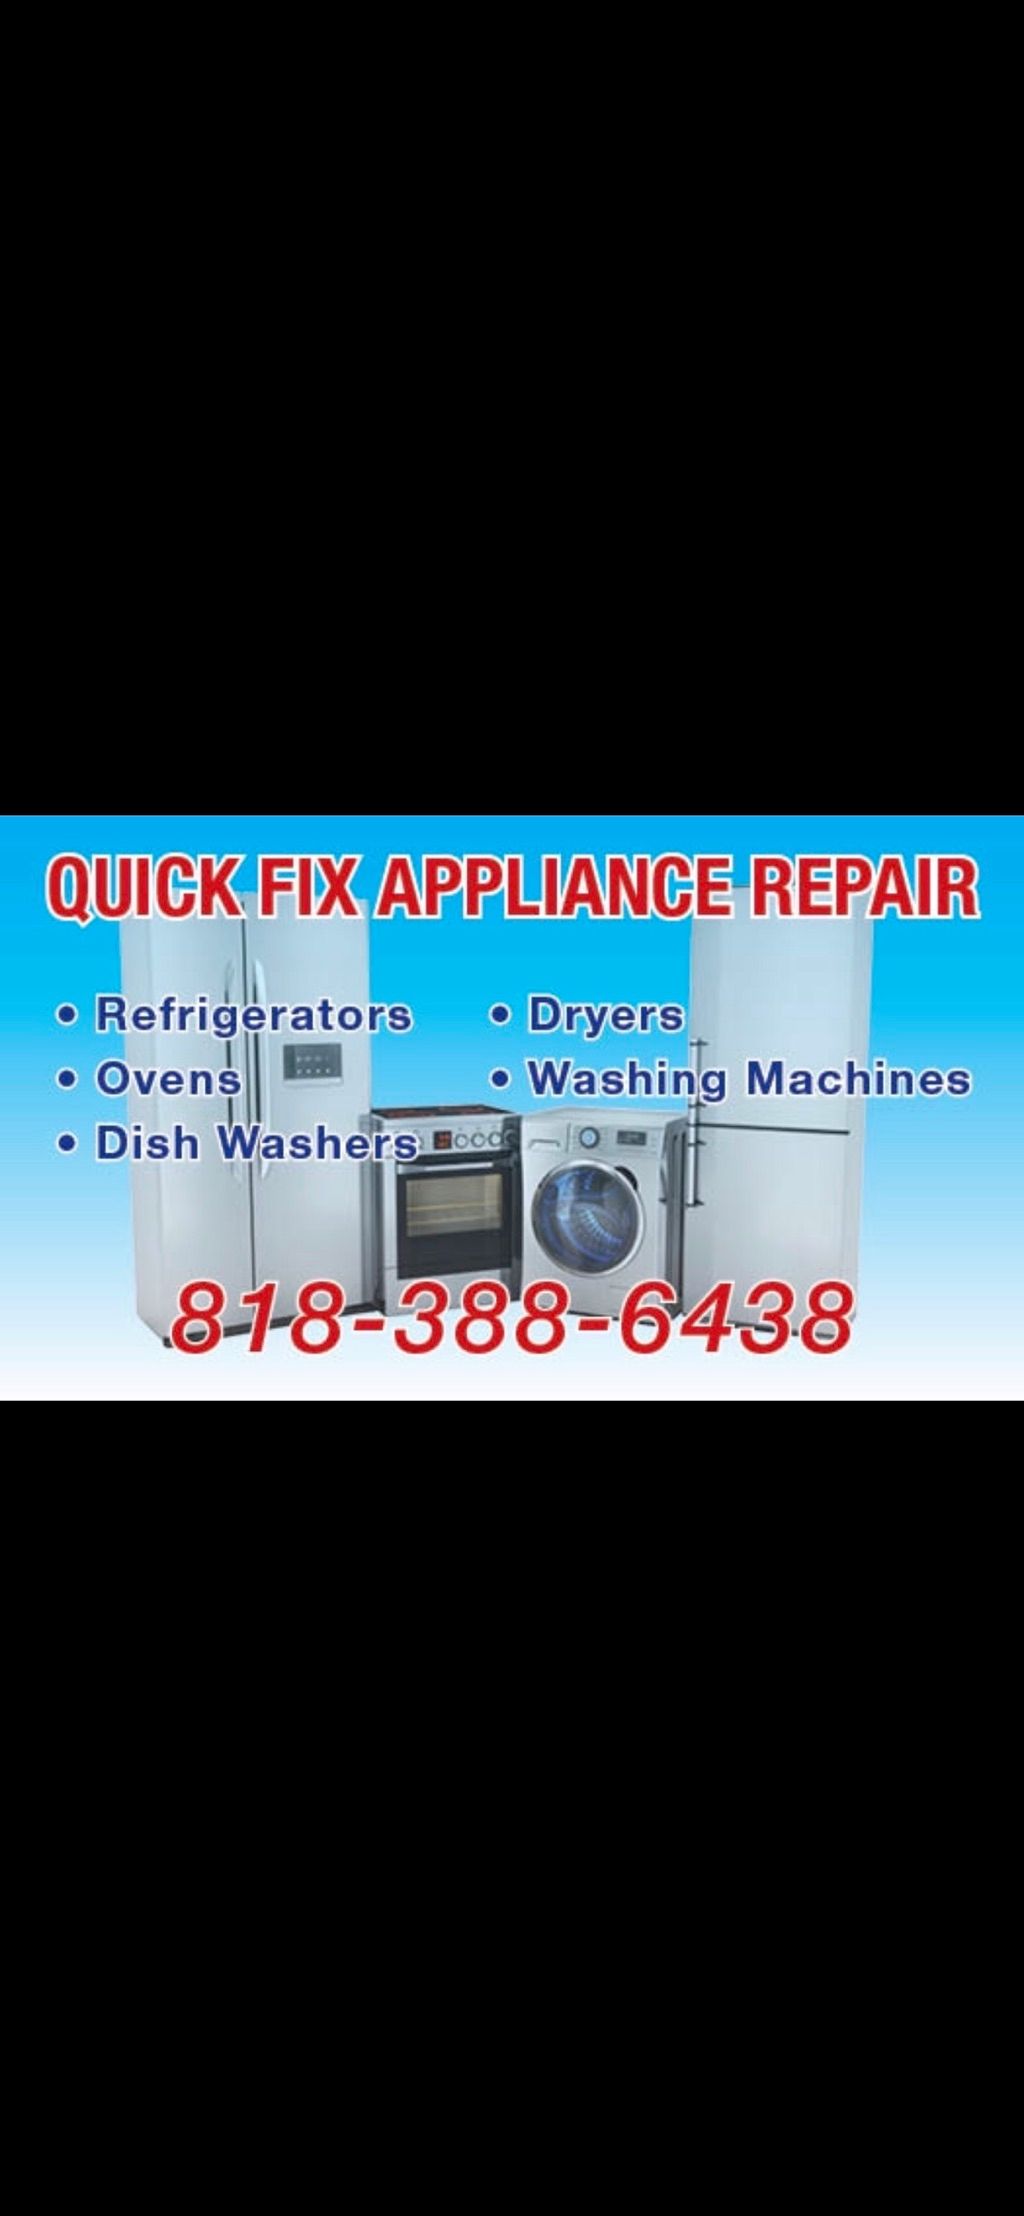 Quick Fix Appliance Repair